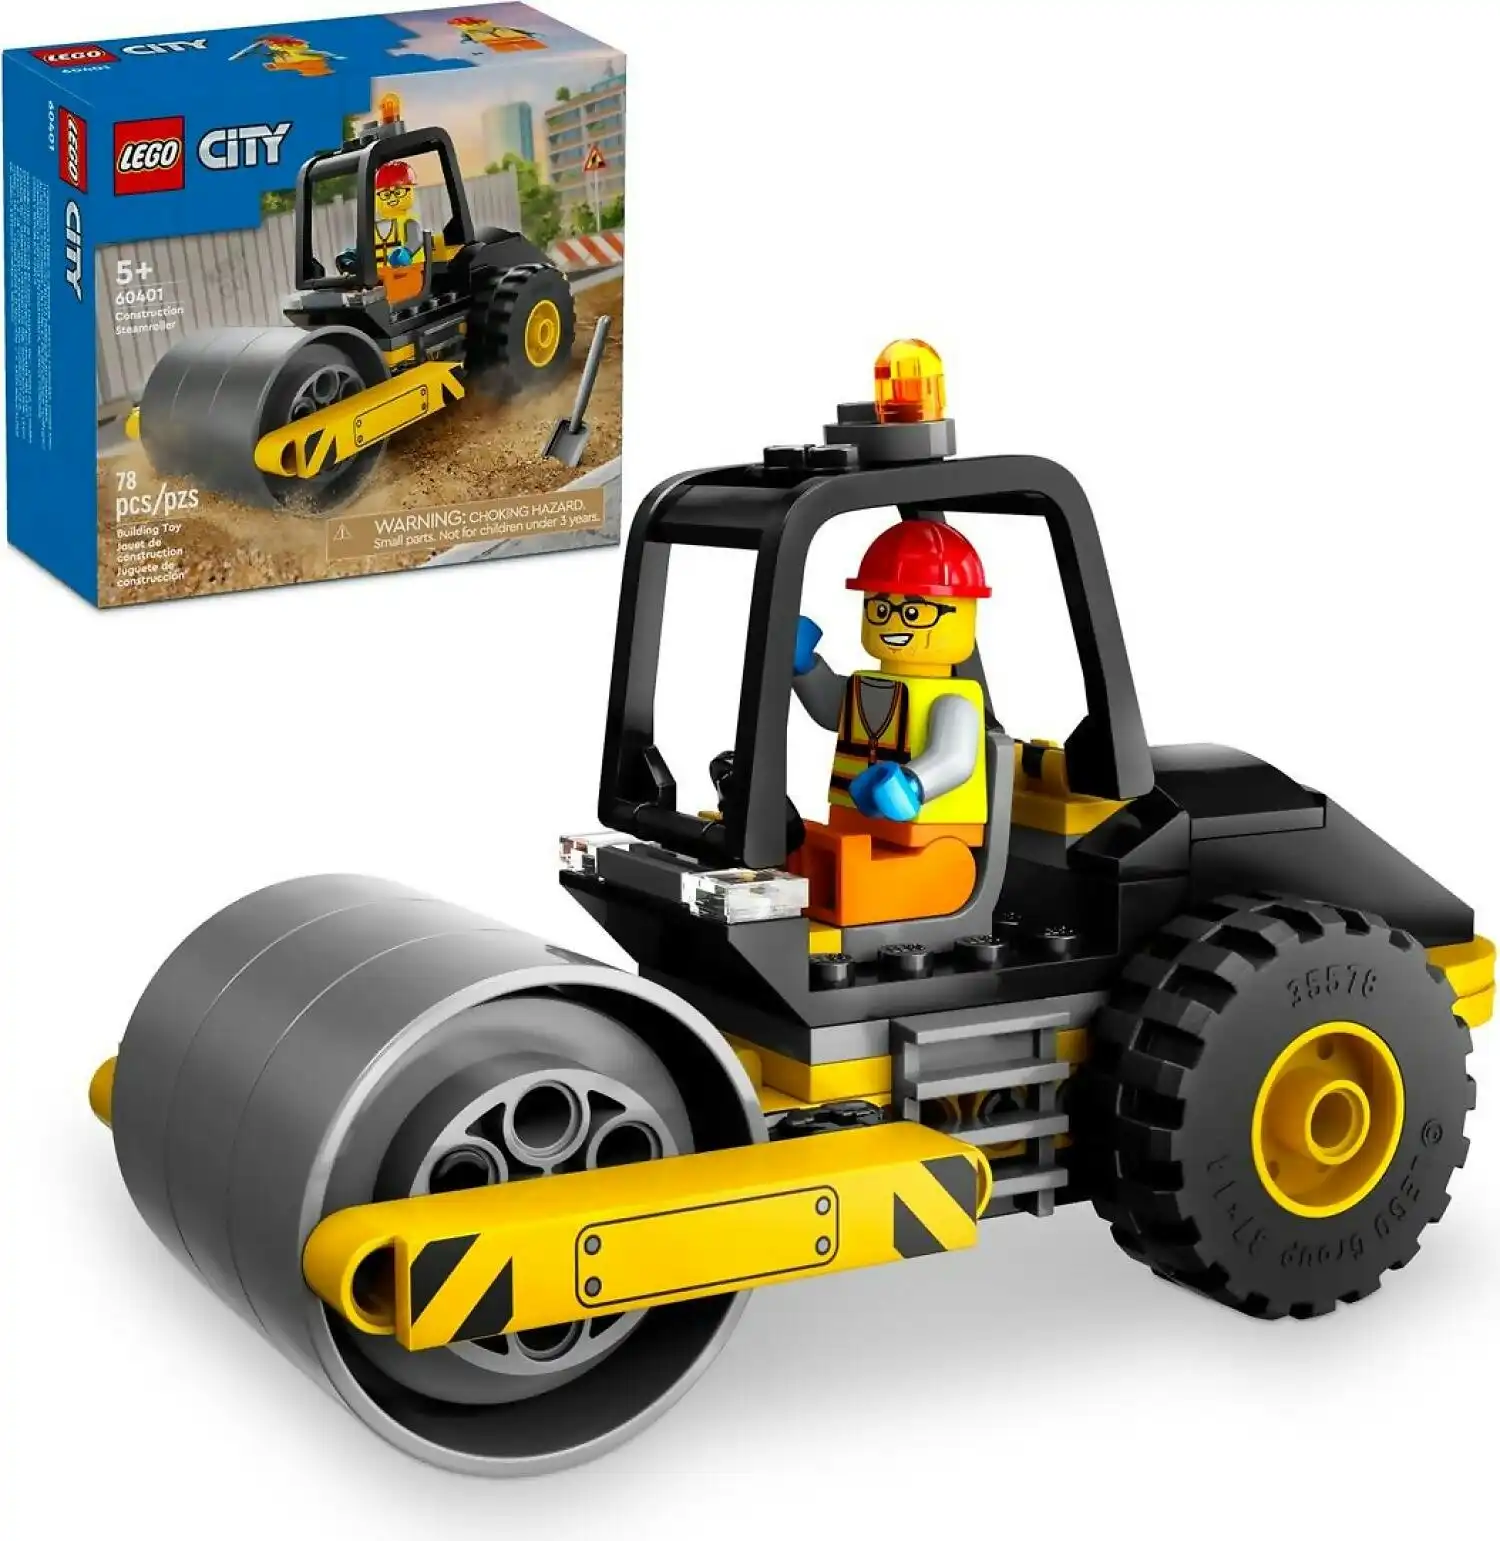 LEGO 60401 Construction Steamroller - City